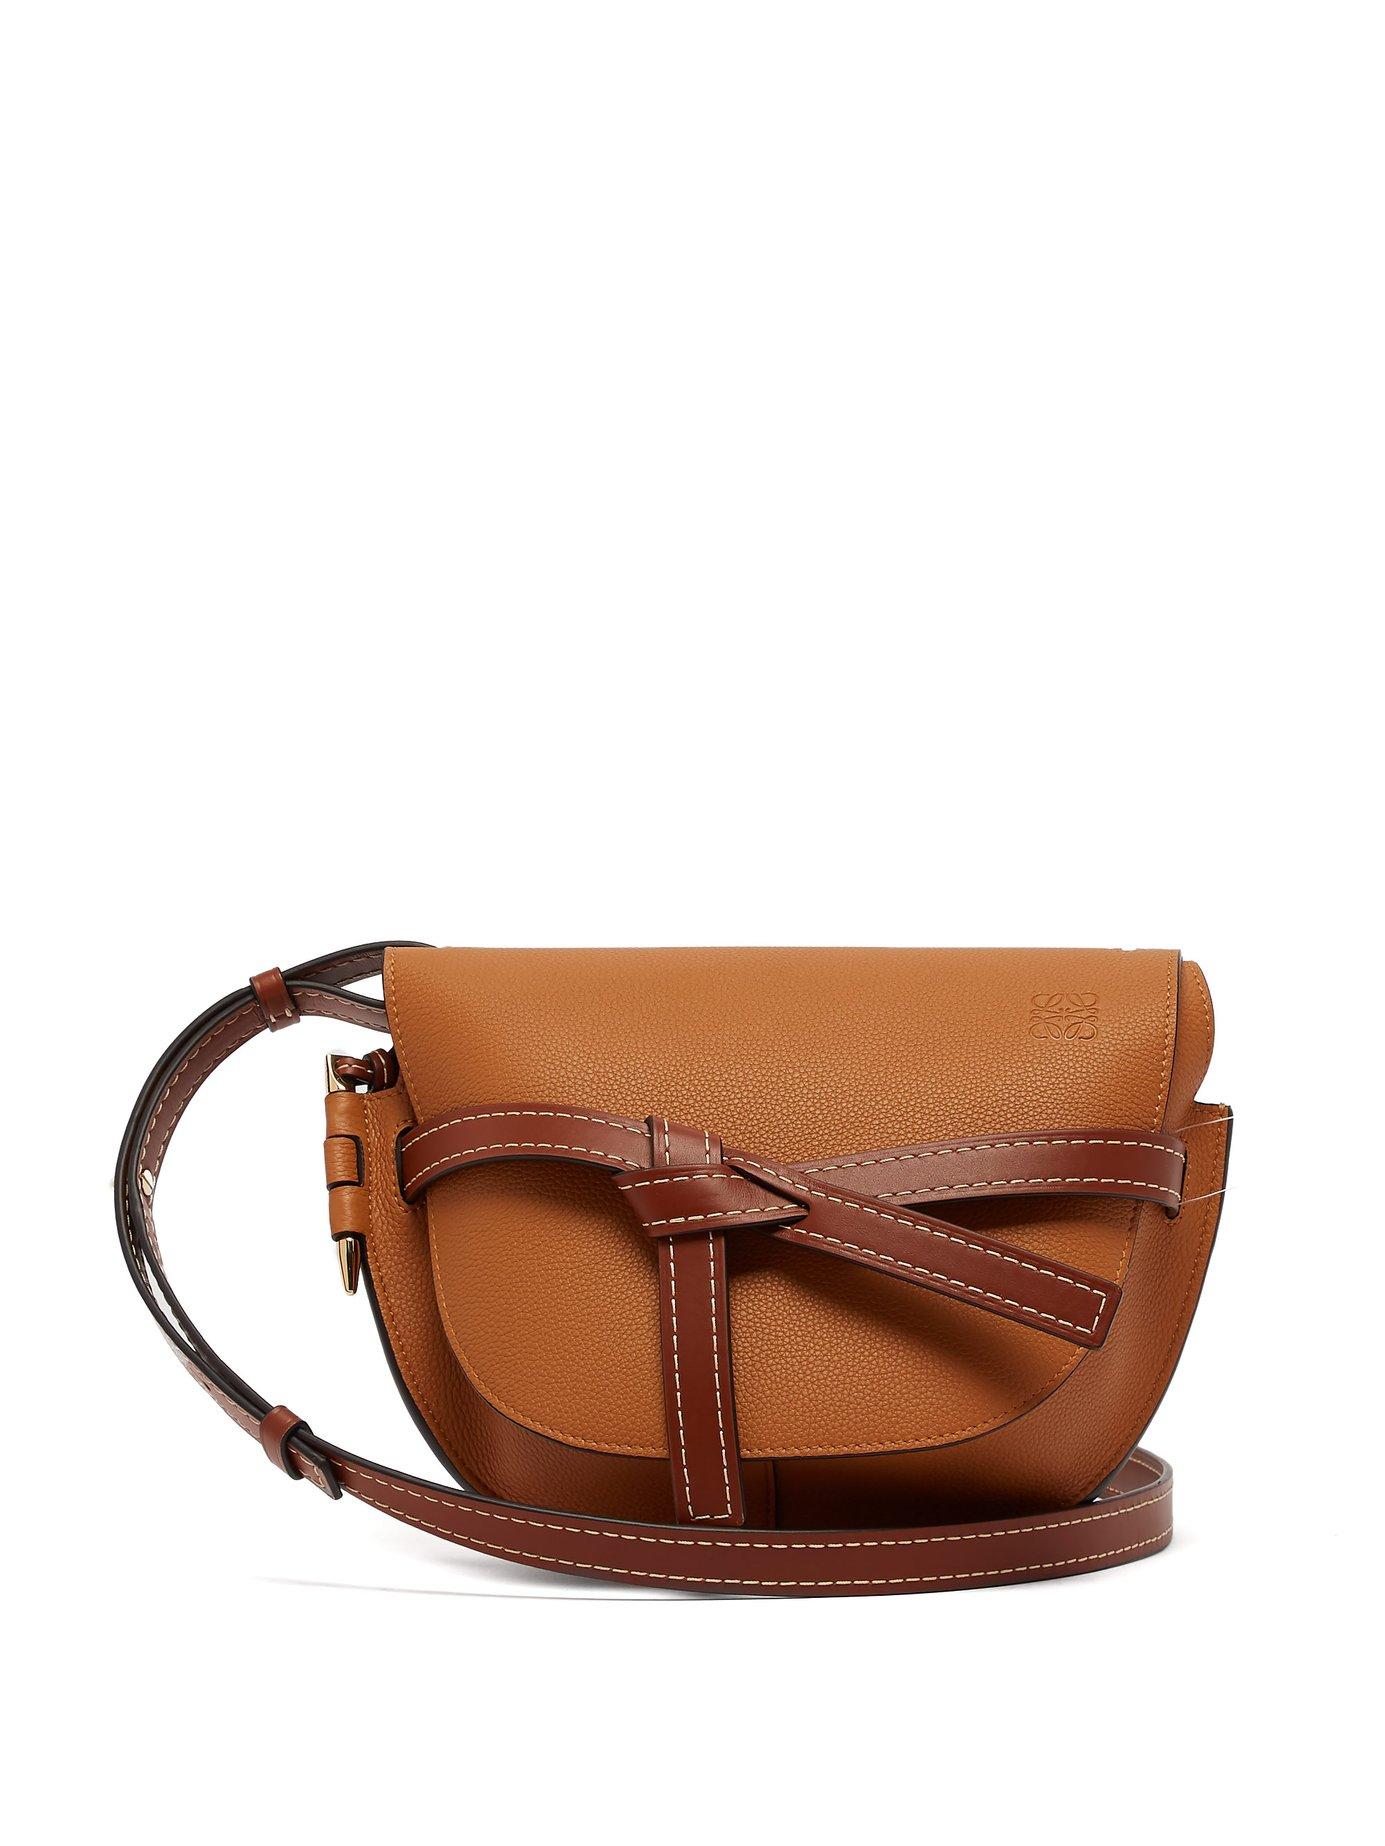 Loewe Gate Small Leather Crossbody Bag - Save 38% - Lyst